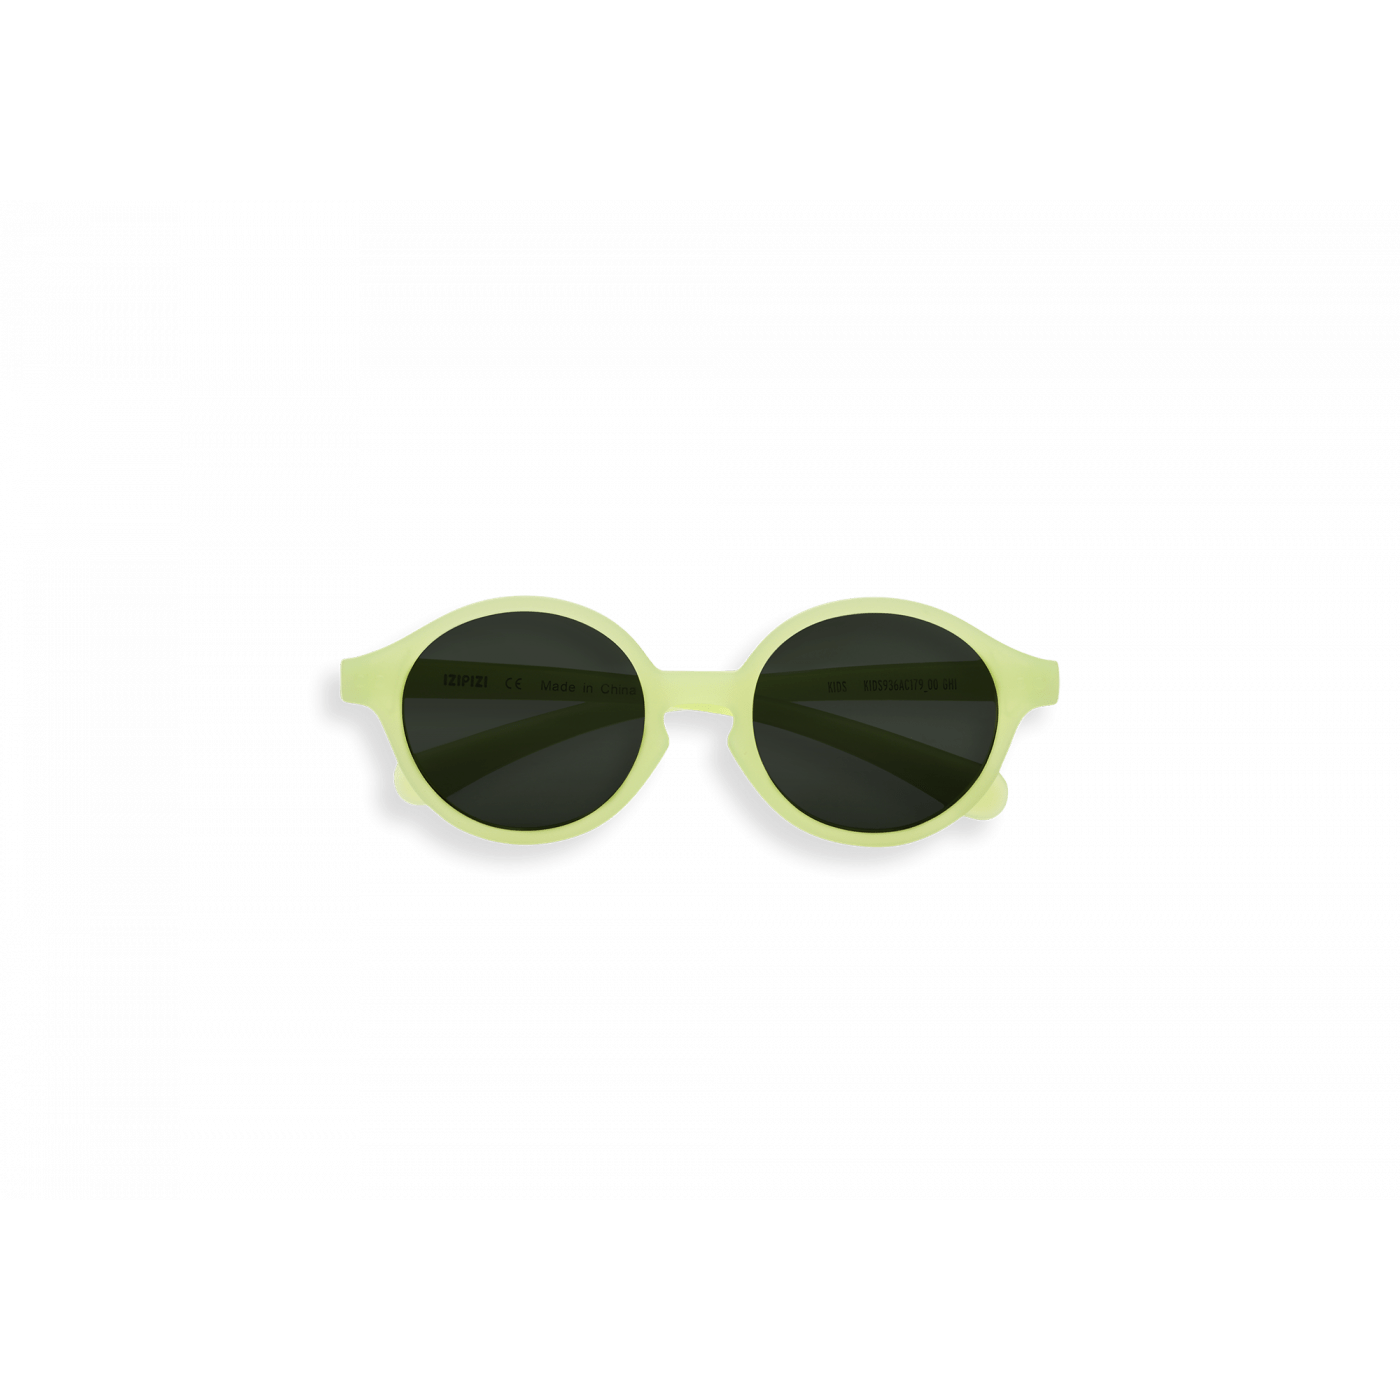 IZIPIZI Apple Green Kids Sunglasses for 9 to 36 Months